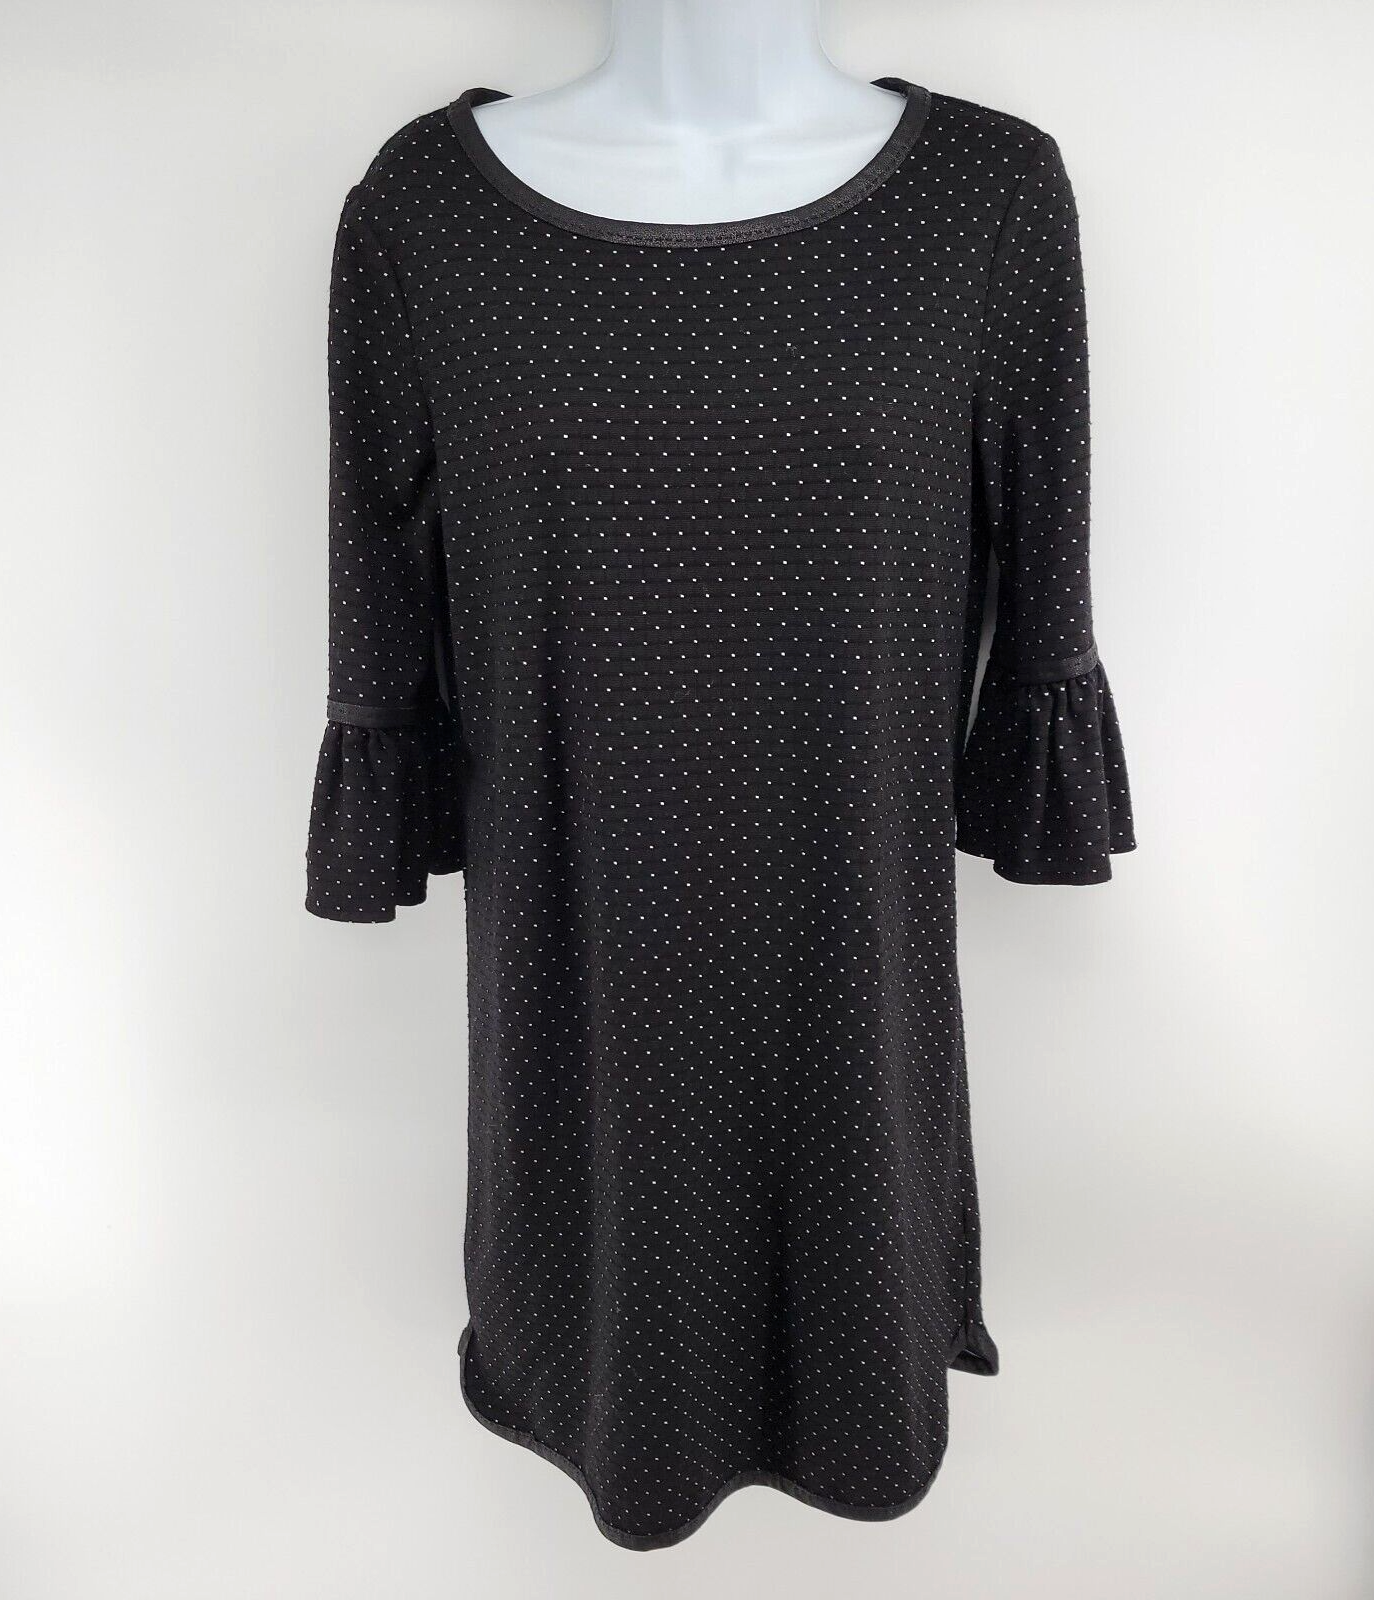 Primary image for Max Studio Black and White Polka Dot Dress Size S